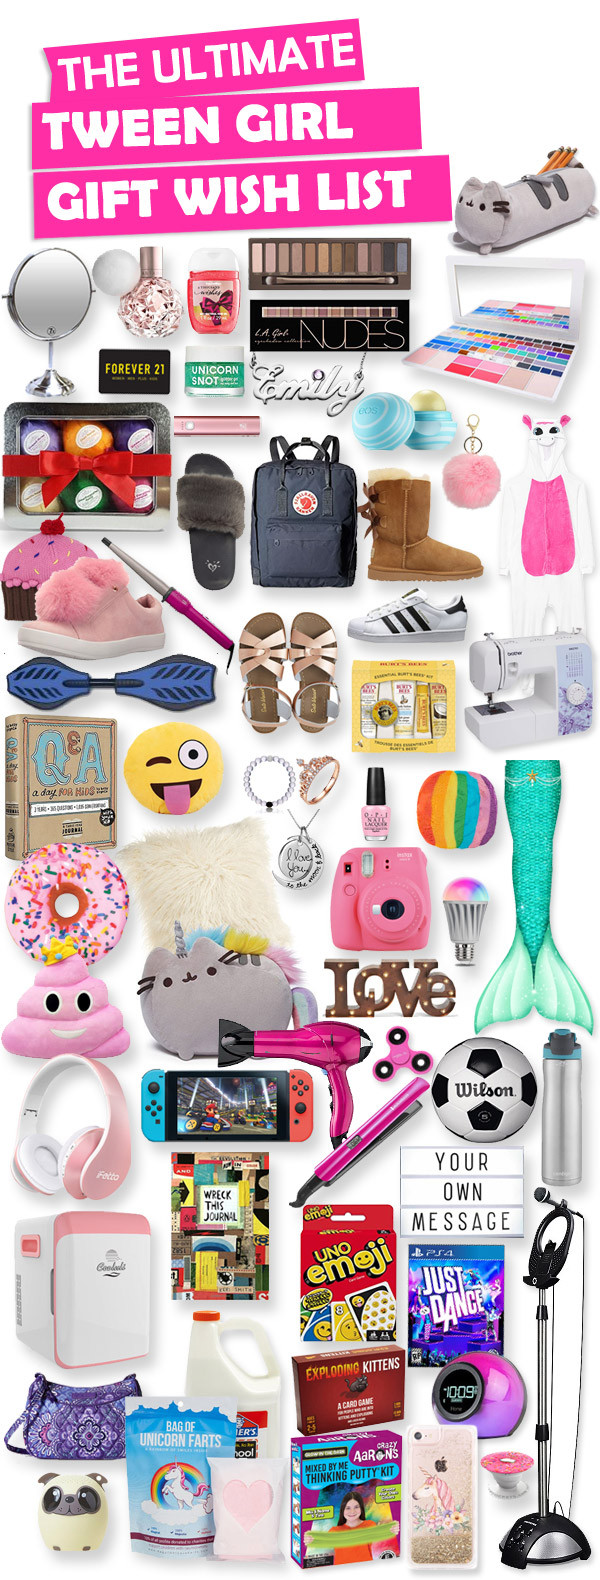 Gift Ideas For Tween Girls
 Gifts For Tween Girls